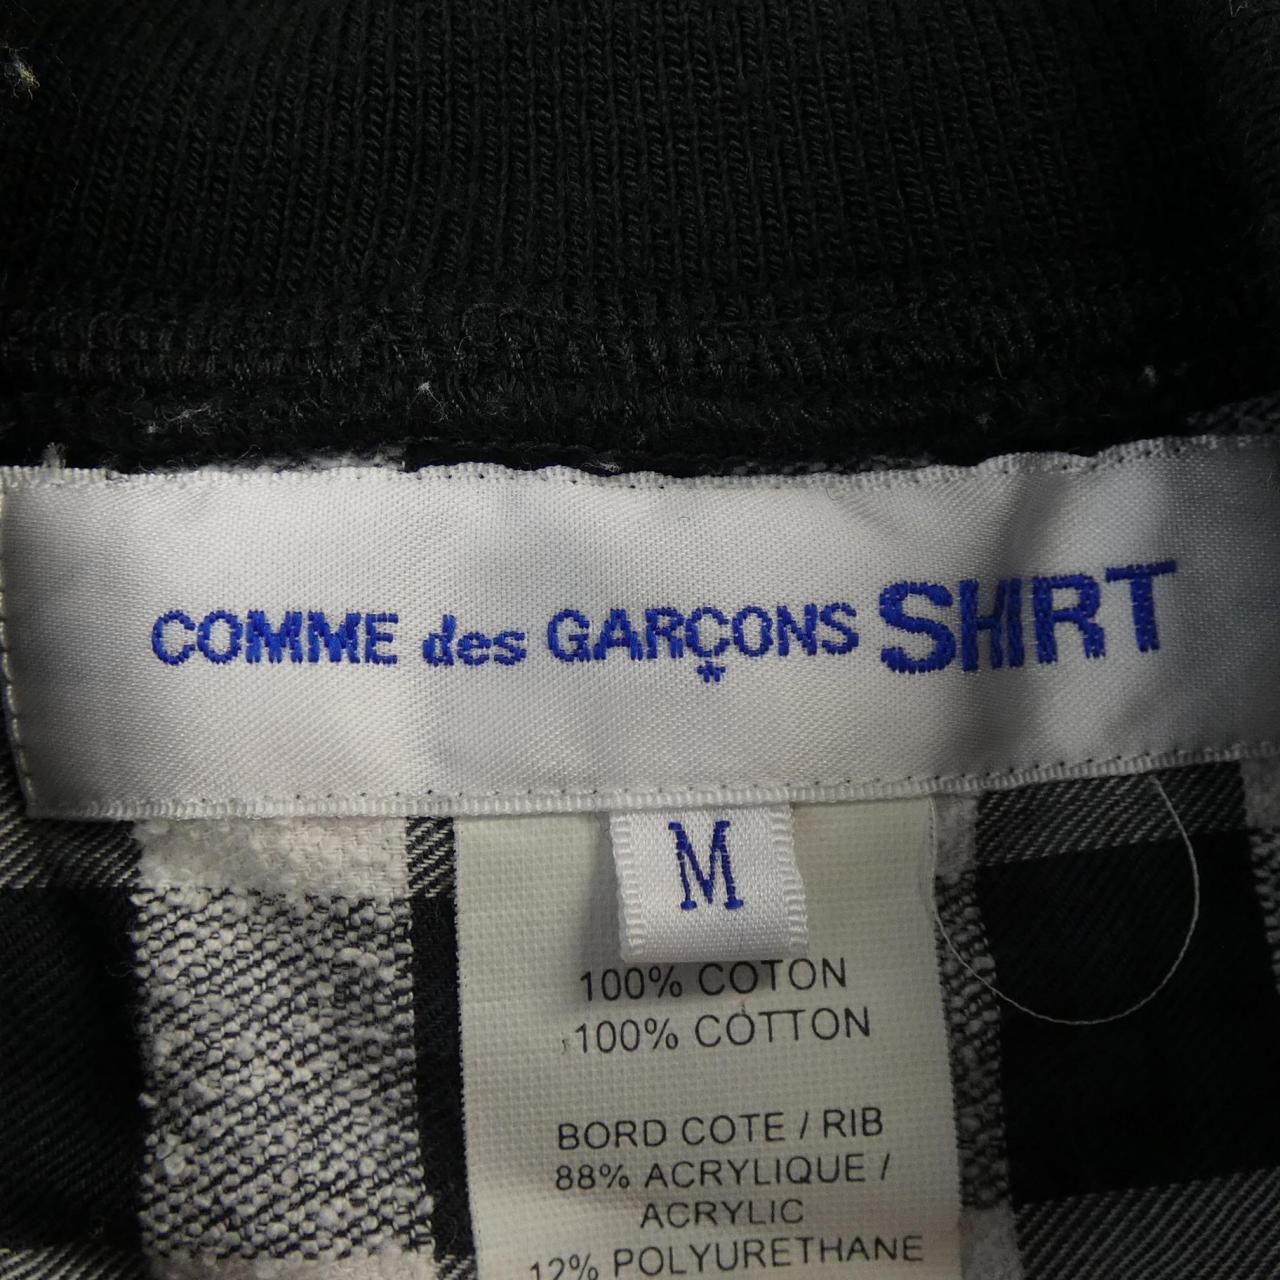 COMDEL GARCONS SHIRT衬衫